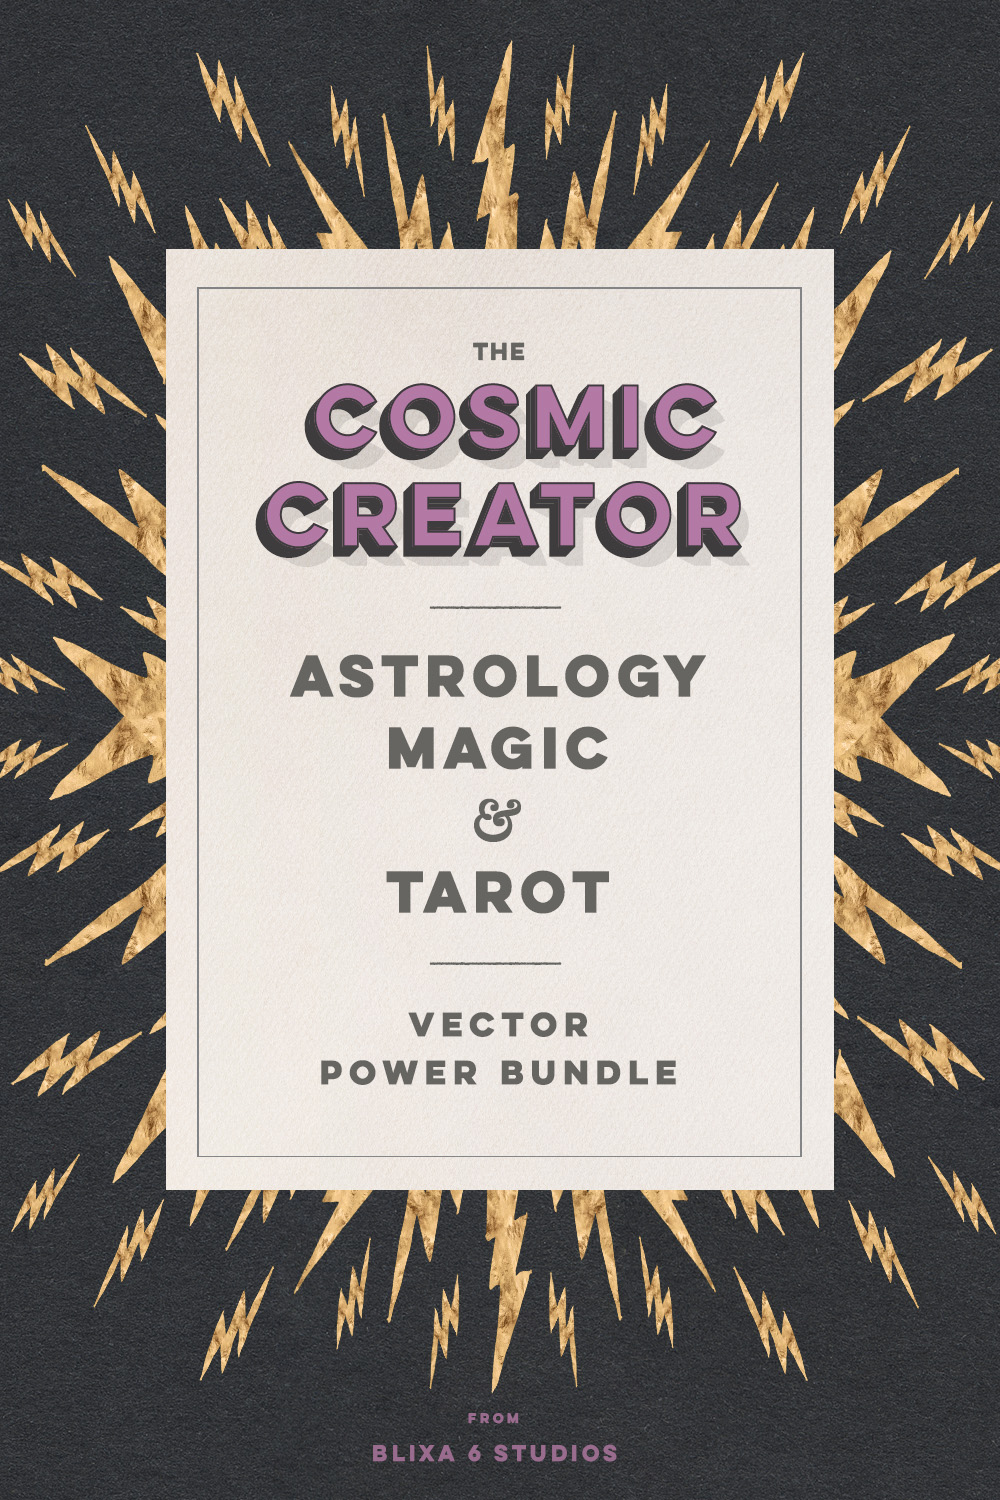 The Cosmic Creator: Astrology Magic & Tarot Vector Power Bundle pinterest preview image.